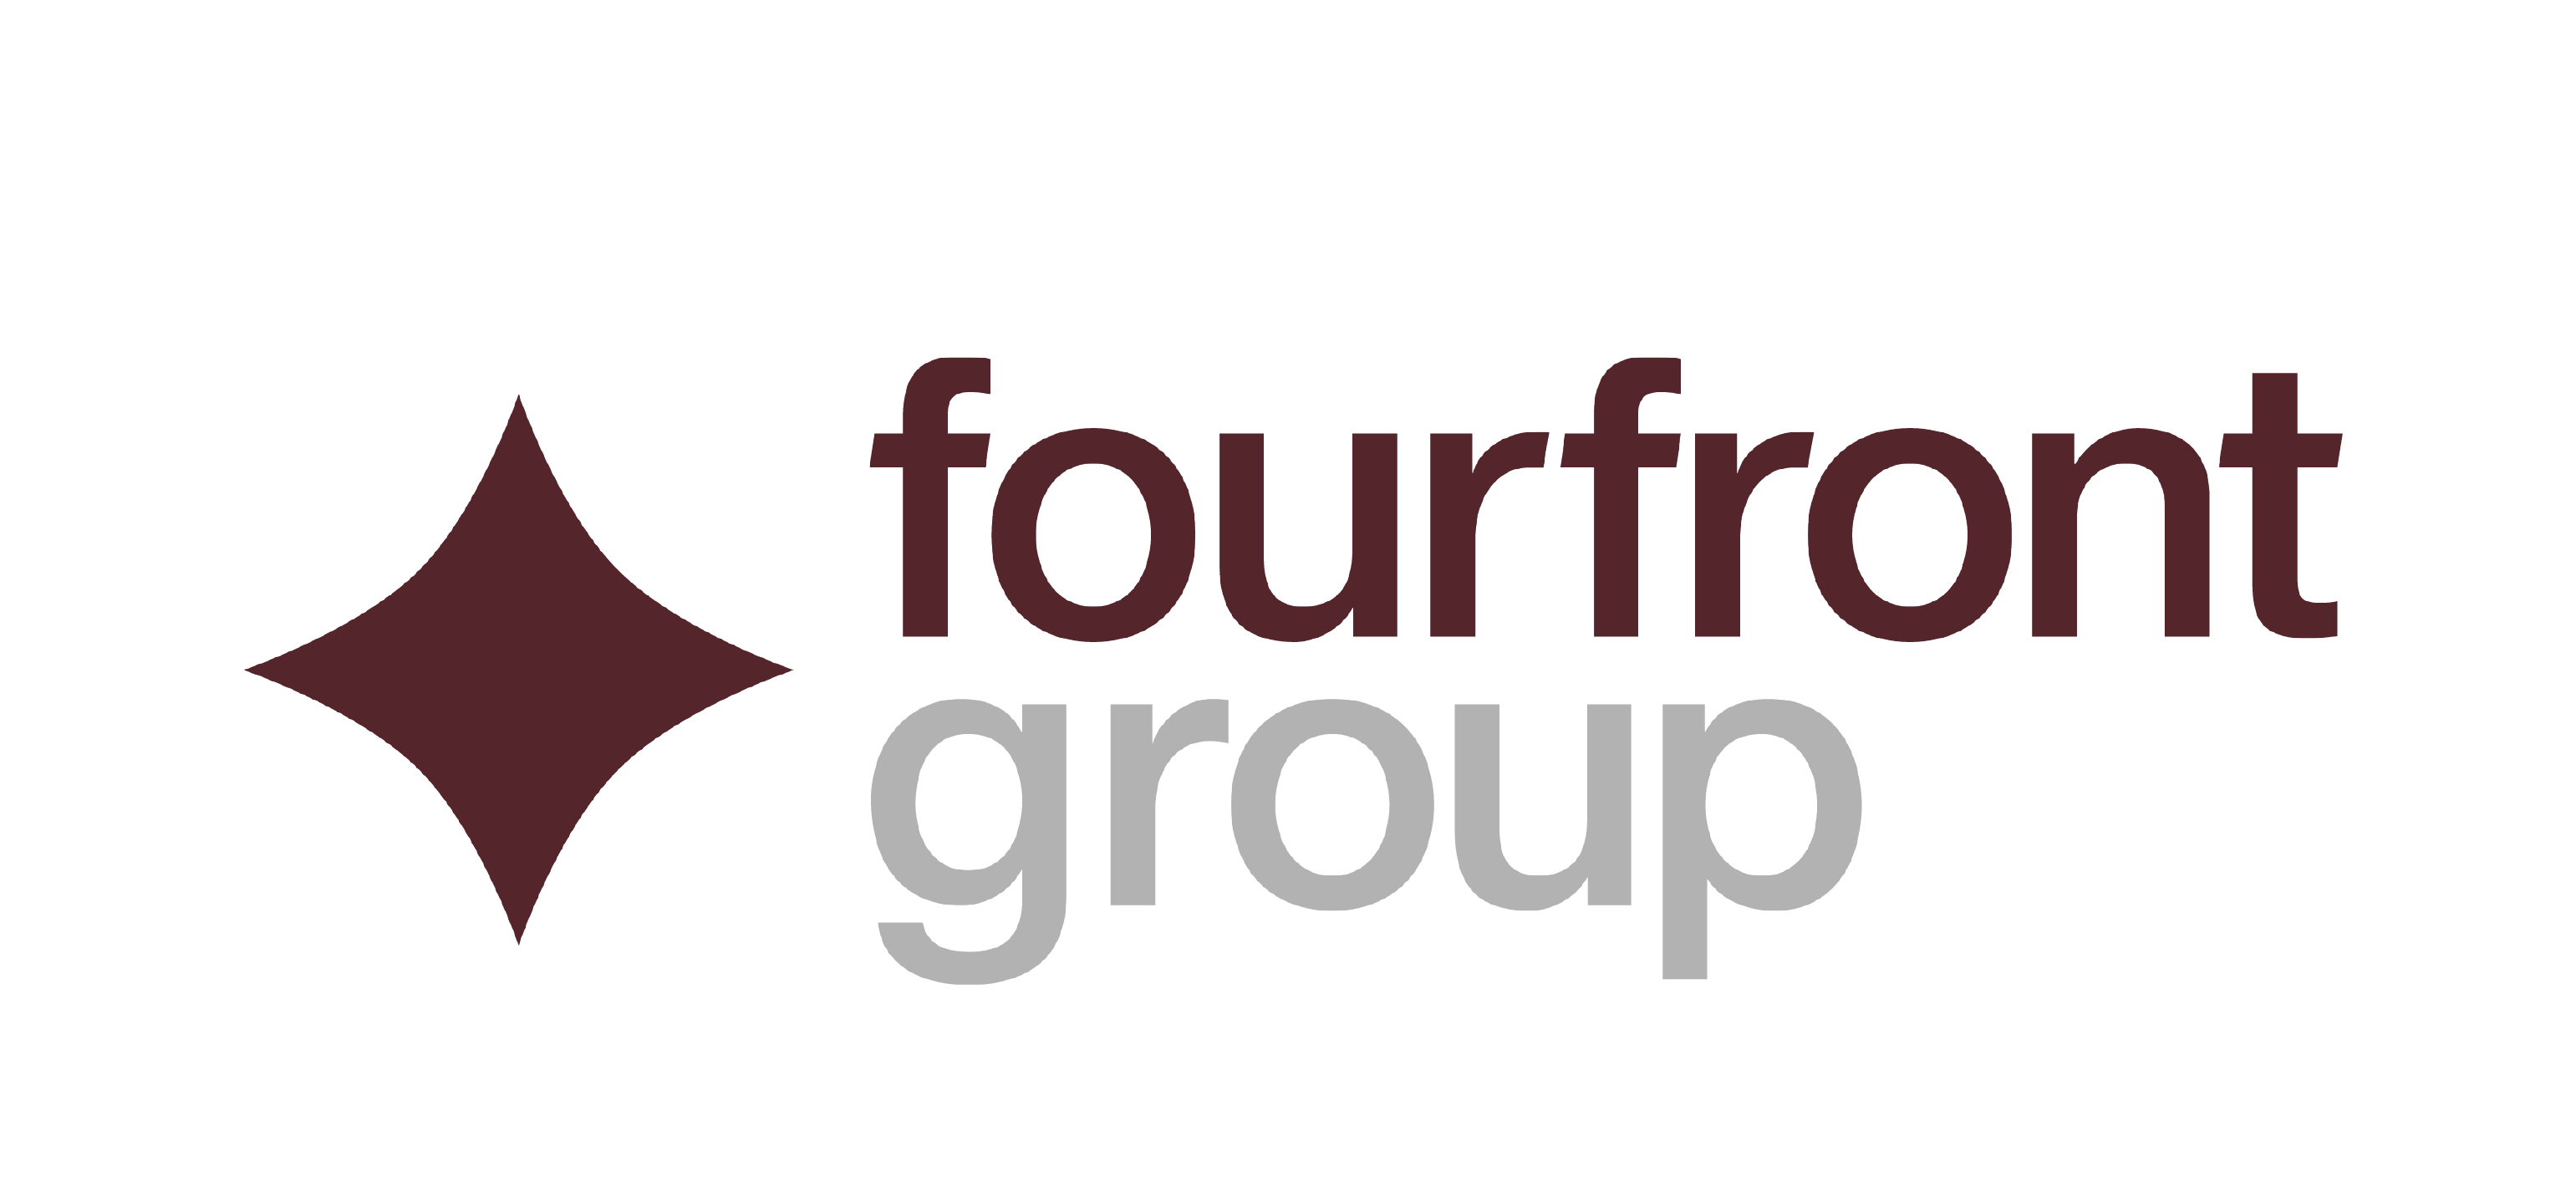 Fourfront Group Logo